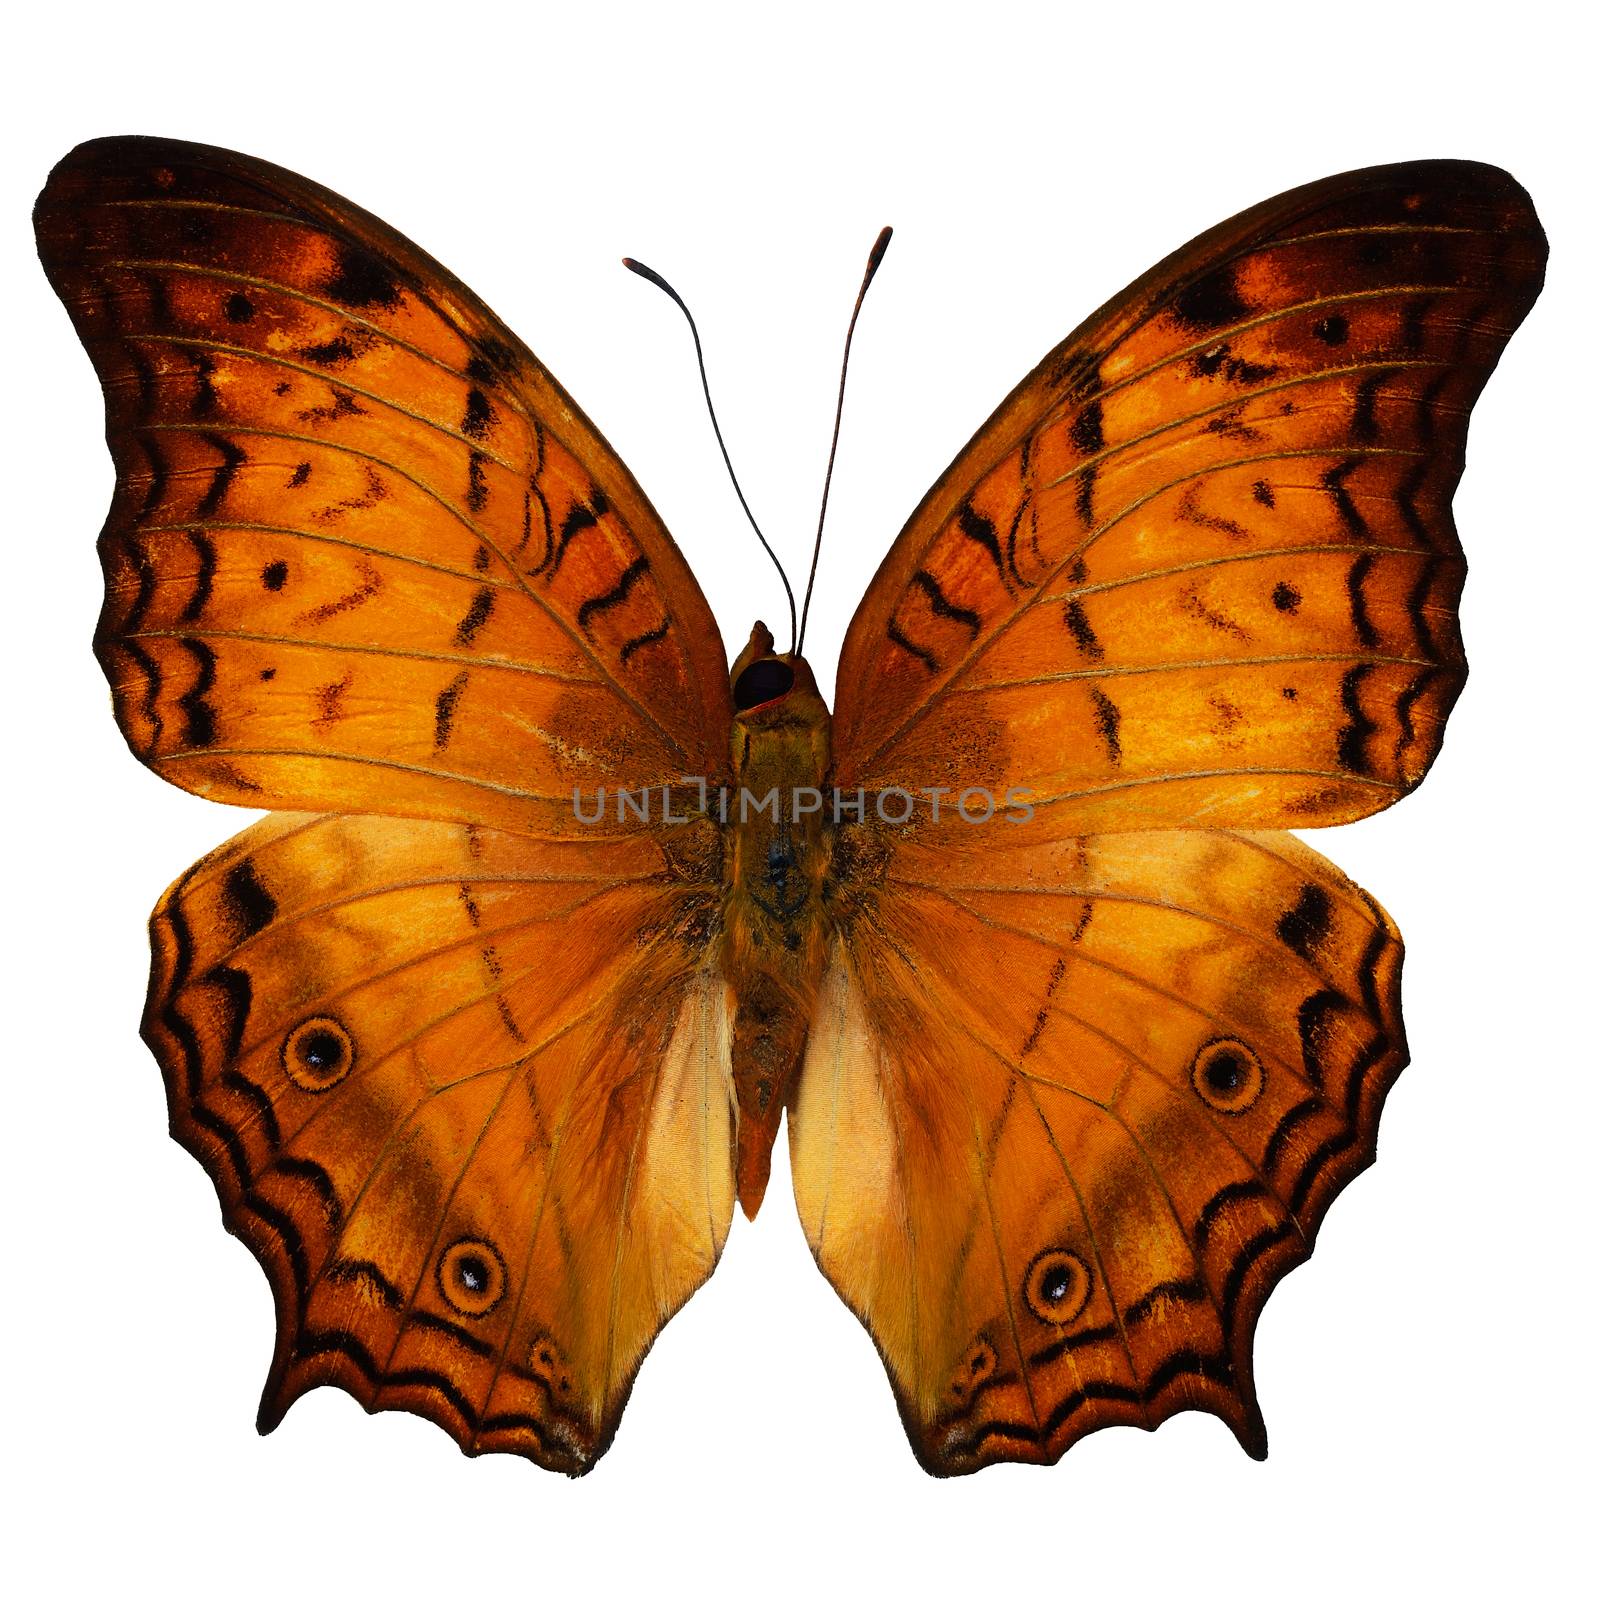 Common Cruiser butterfly  by panuruangjan